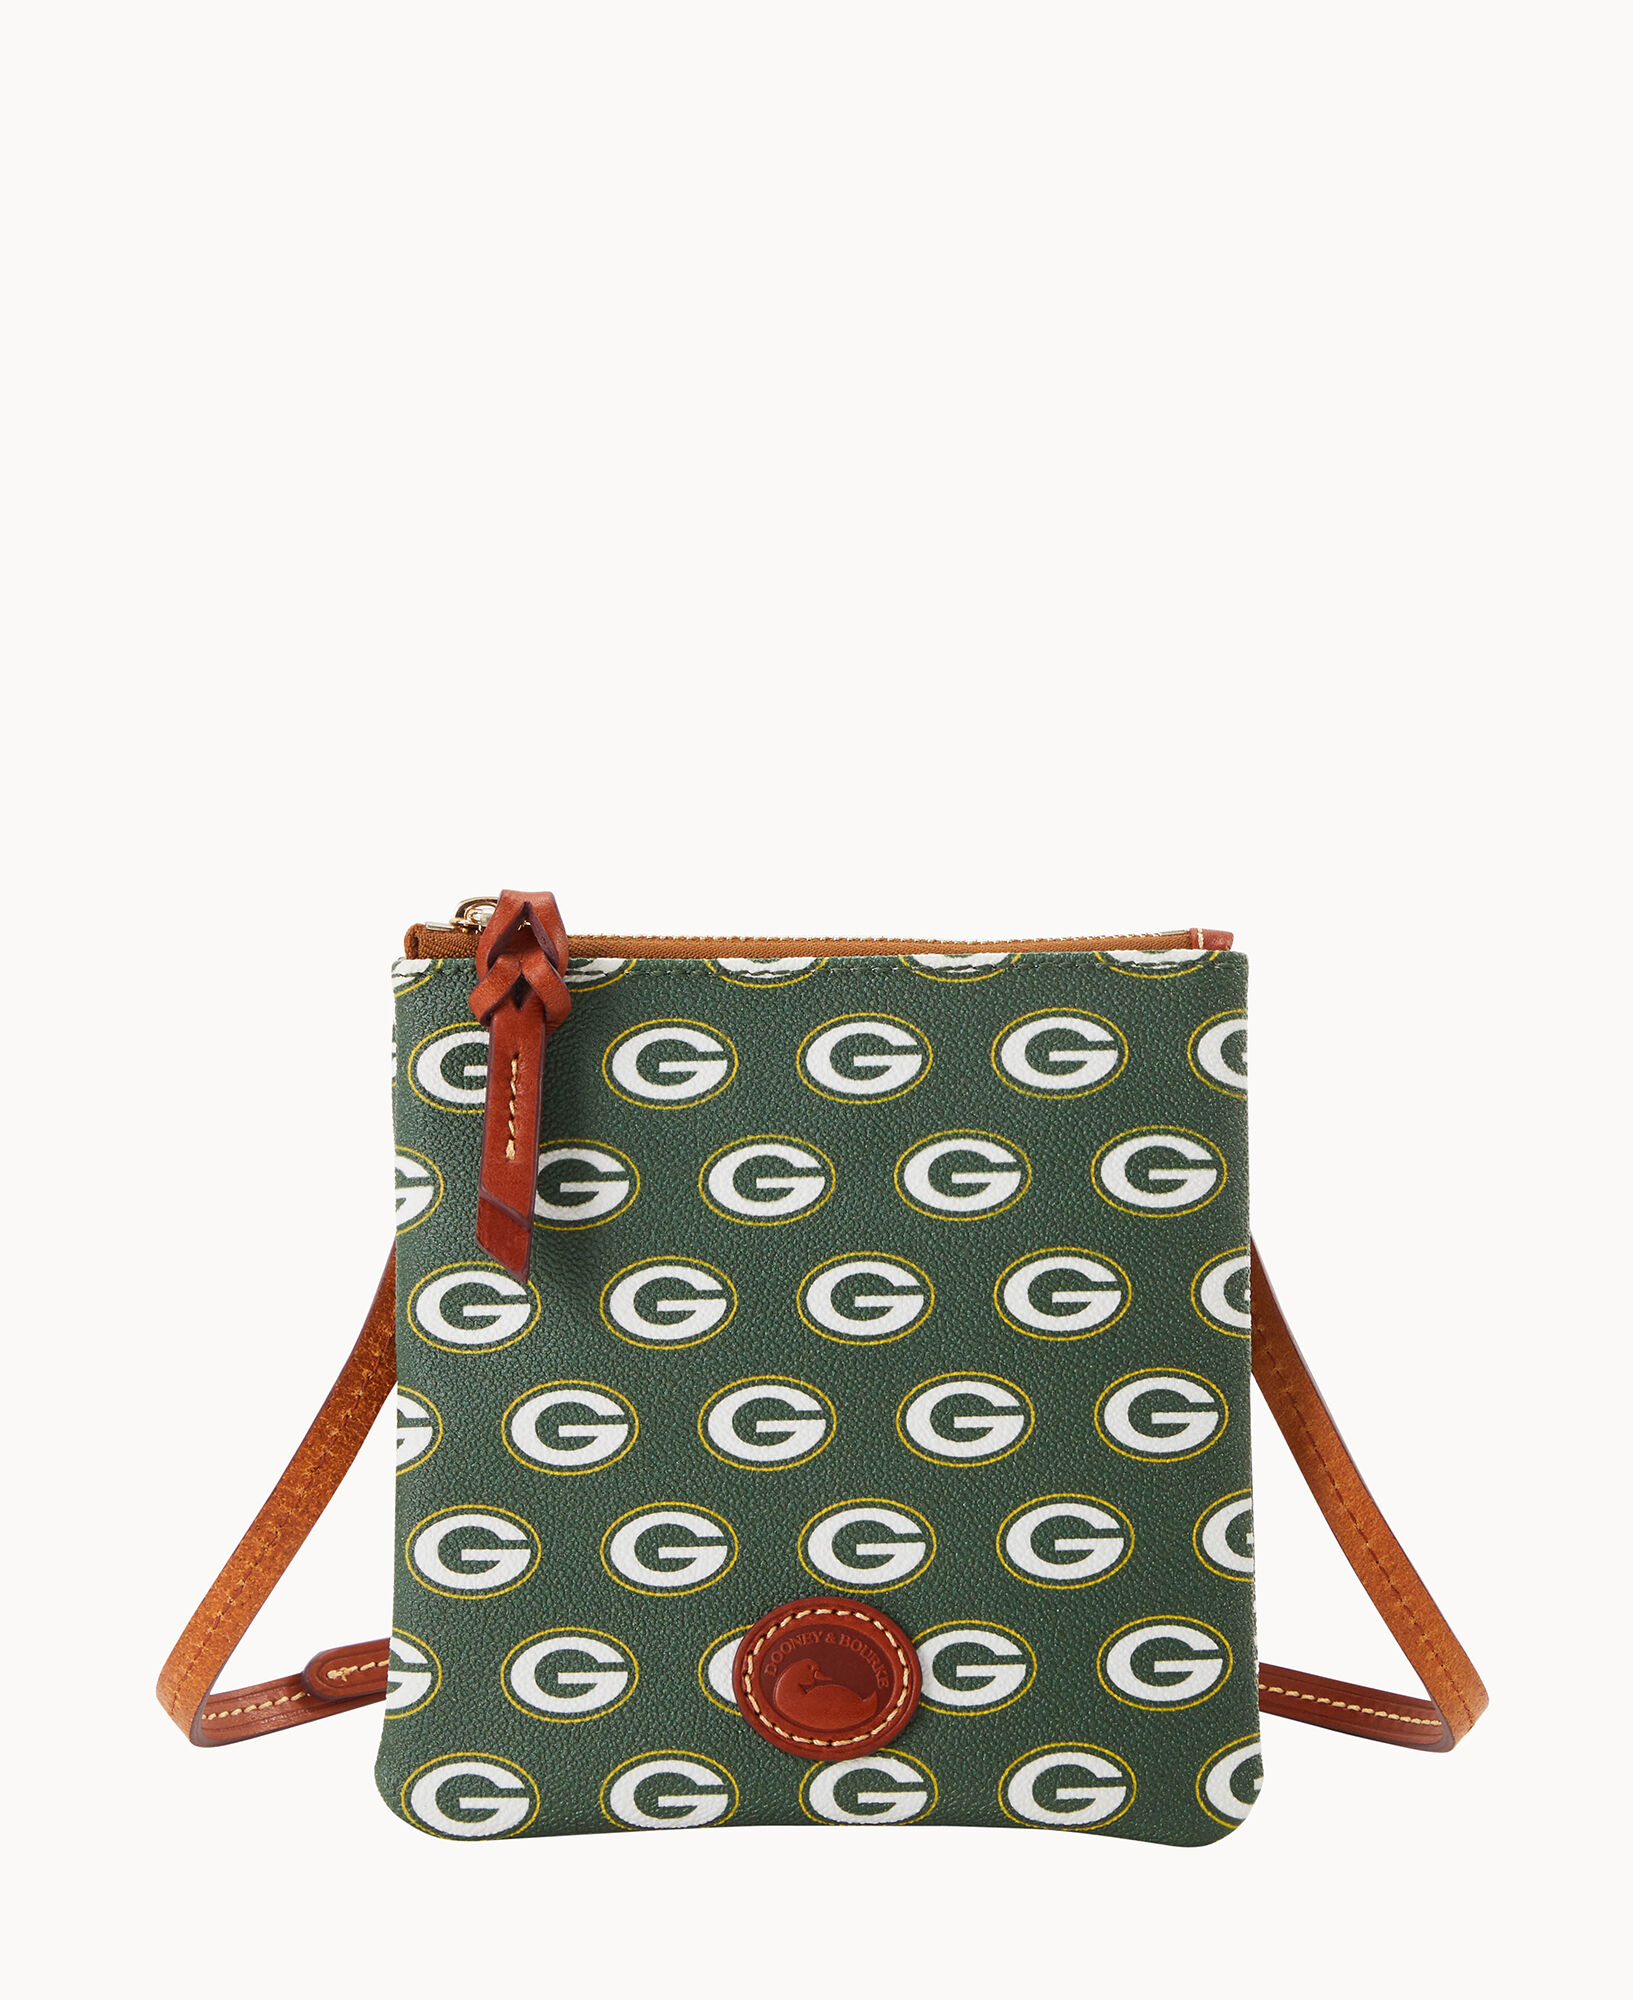 Dooney & Bourke NFL Packers Lexi Crossbody Bag